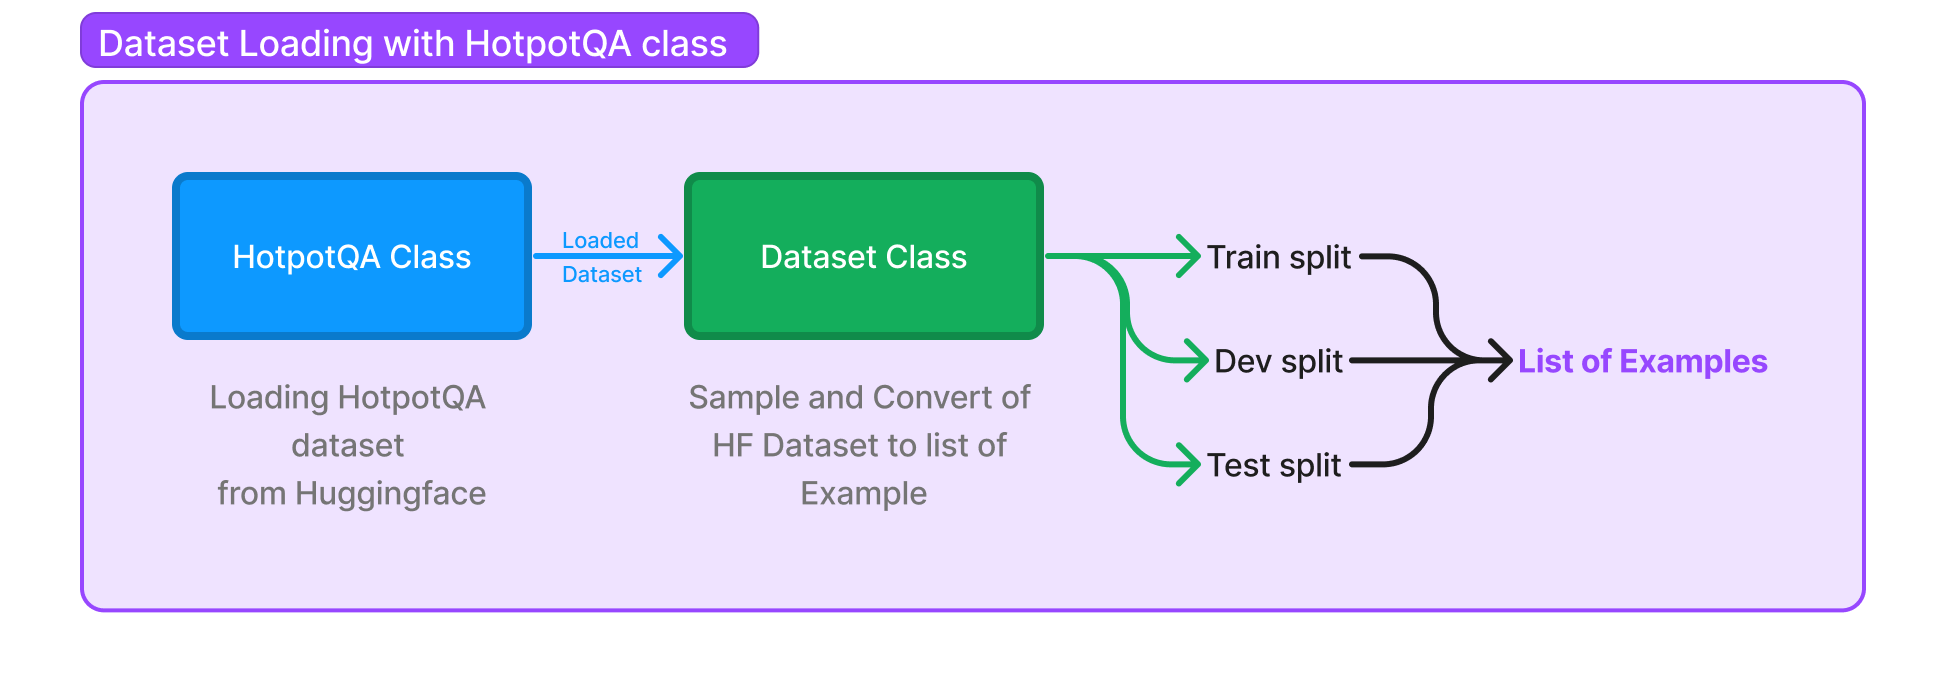 Dataset Loading Process in HotPotQA Class